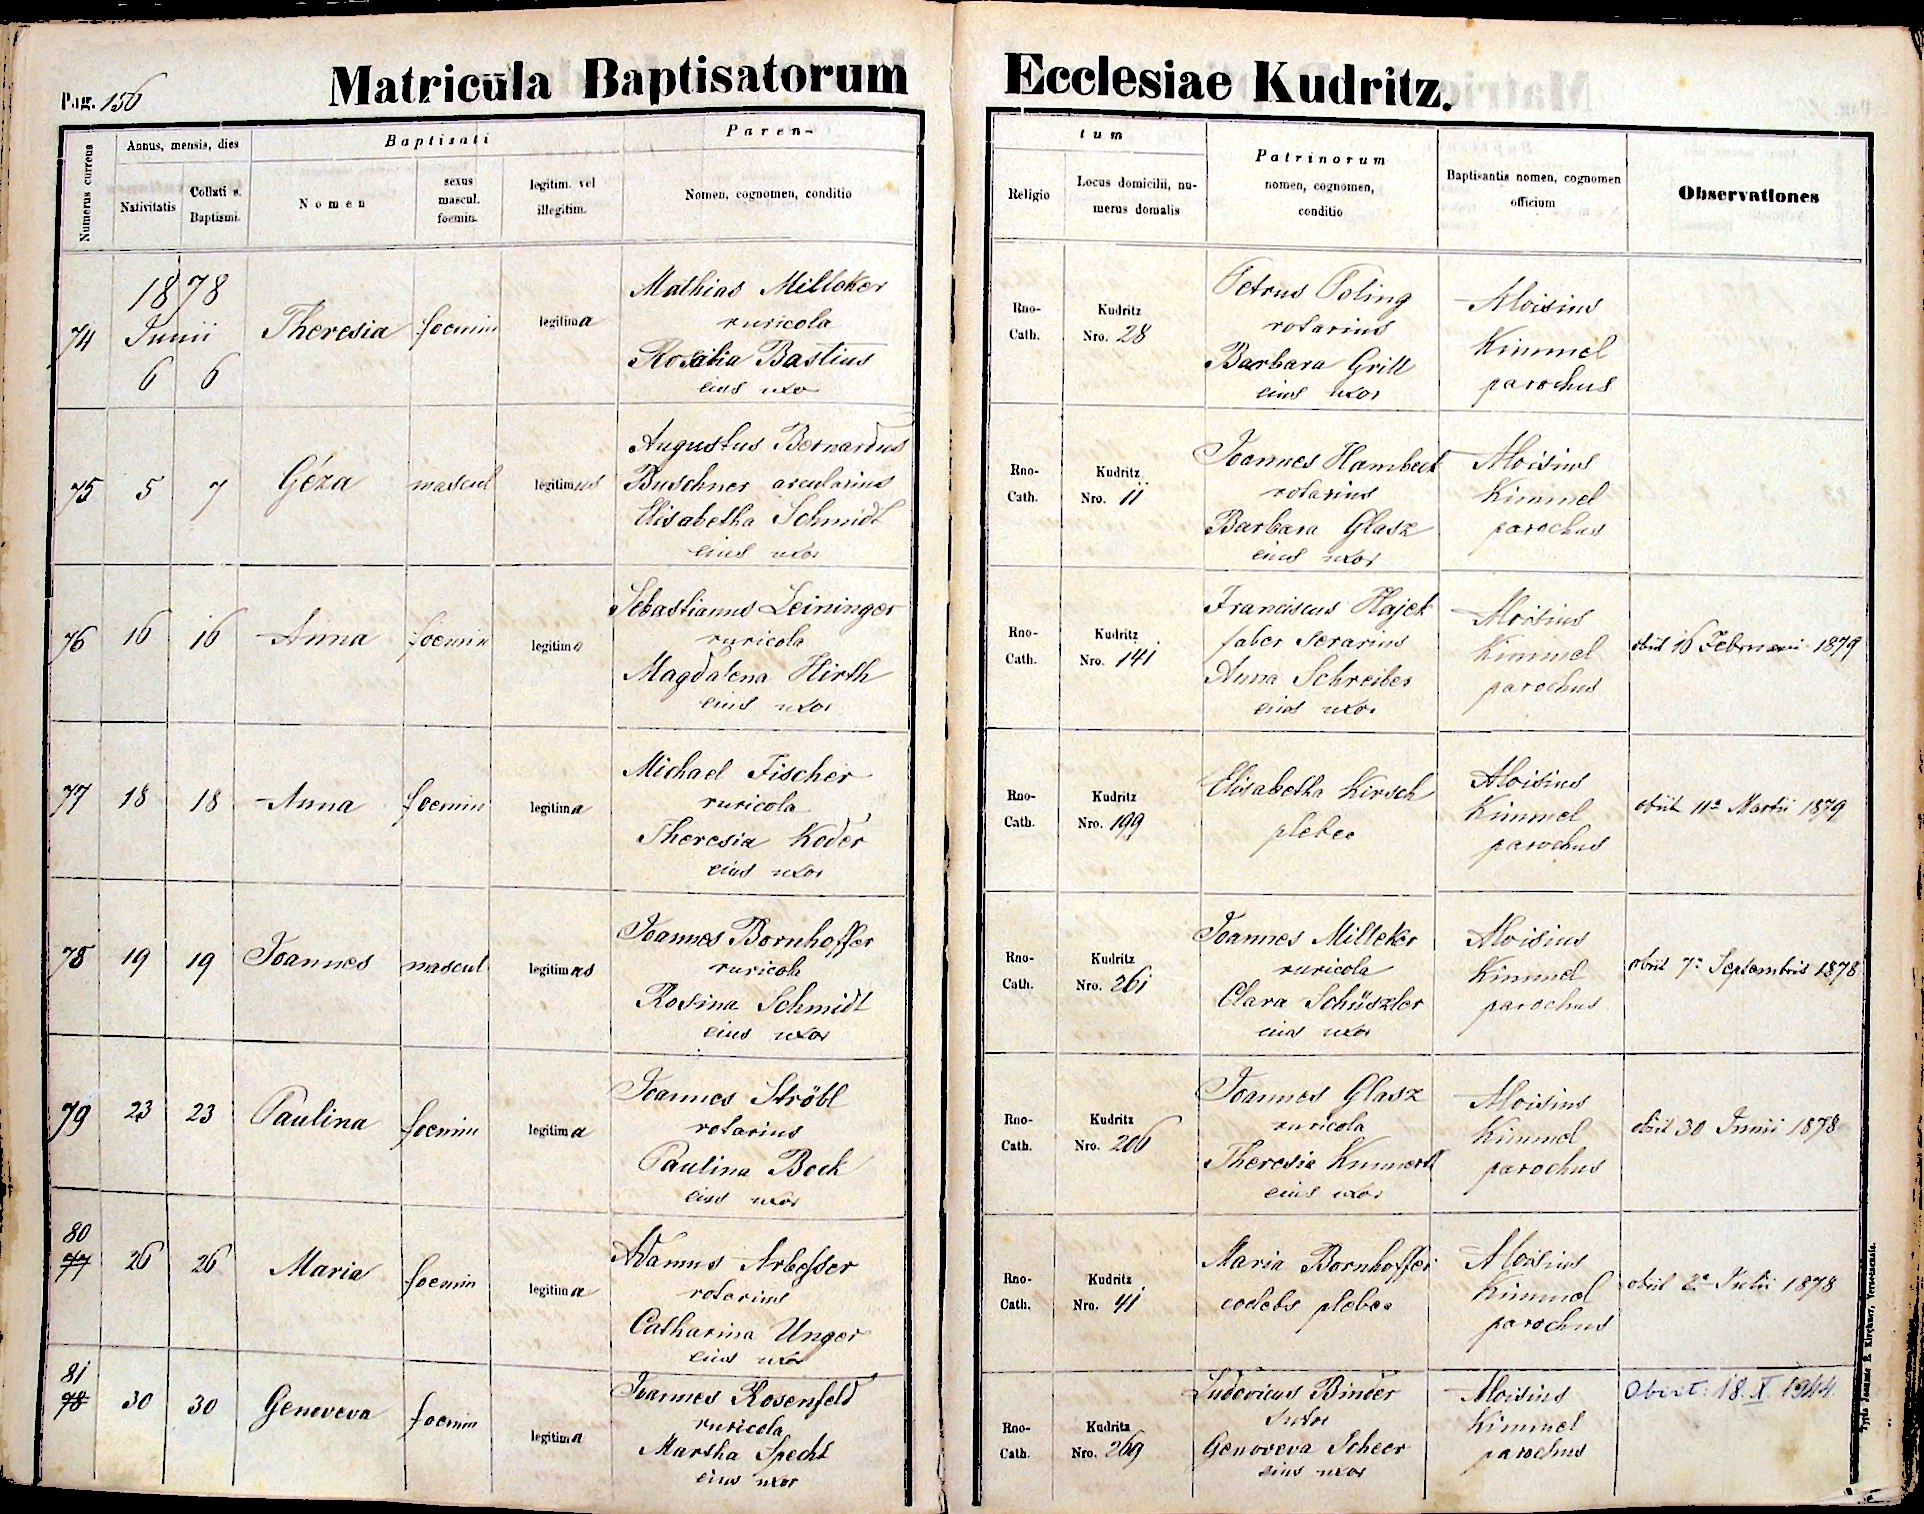 images/church_records/BIRTHS/1870-1879B/1878/156